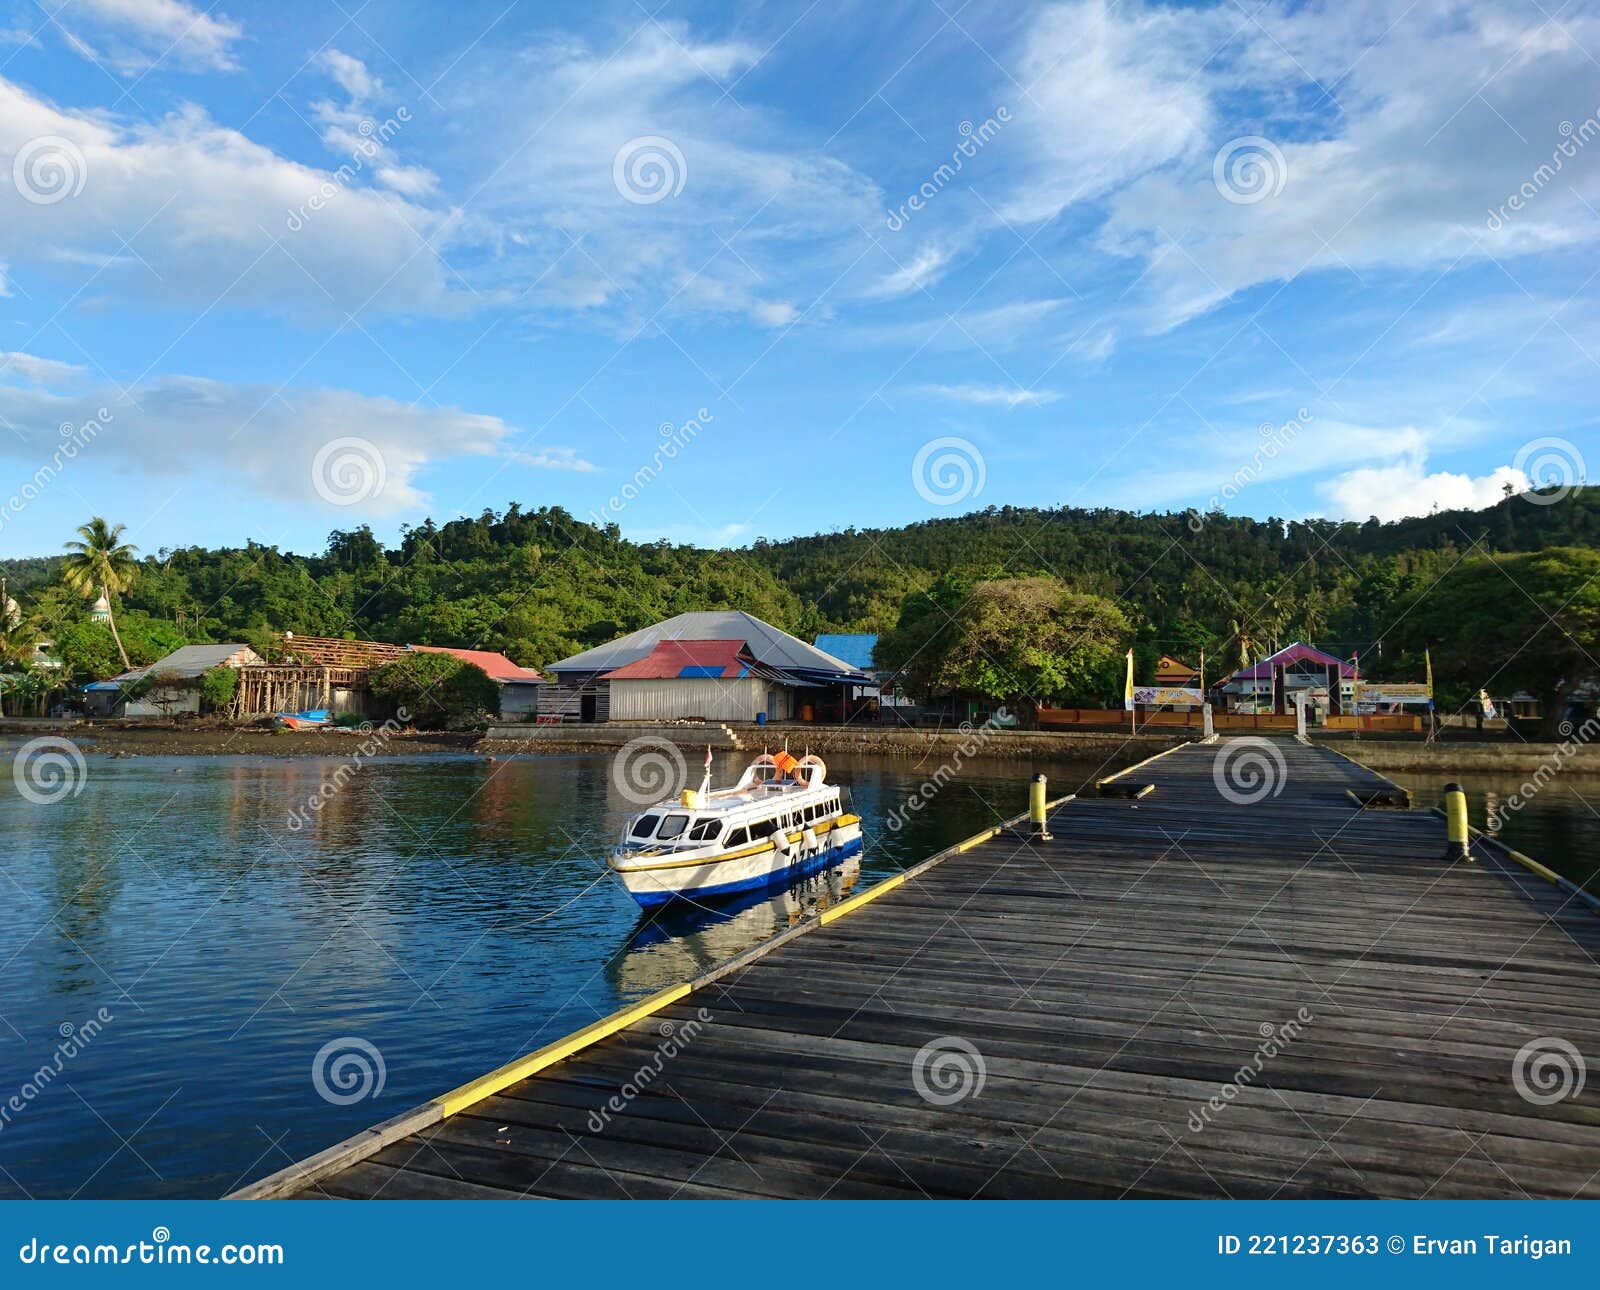 small port of waylegi village, patani sub-district, central halmahera district, north maluku province, indonesia